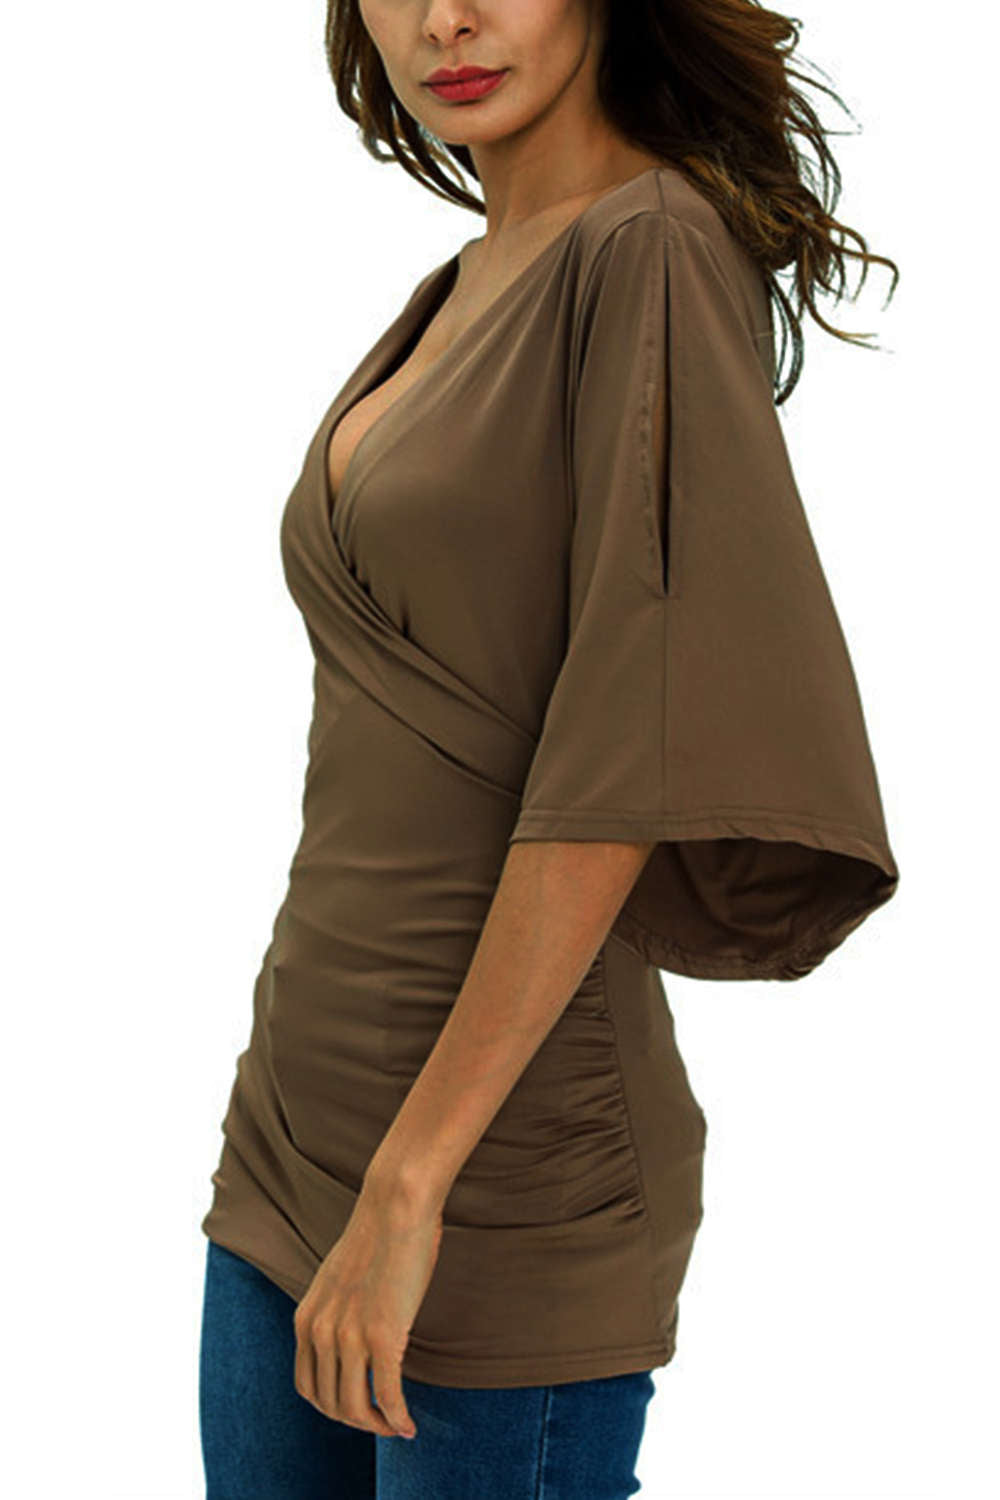 Iyasson Women's V Neck Cold Shoulder Trumpet Sleeve Wrap Top T-shirts